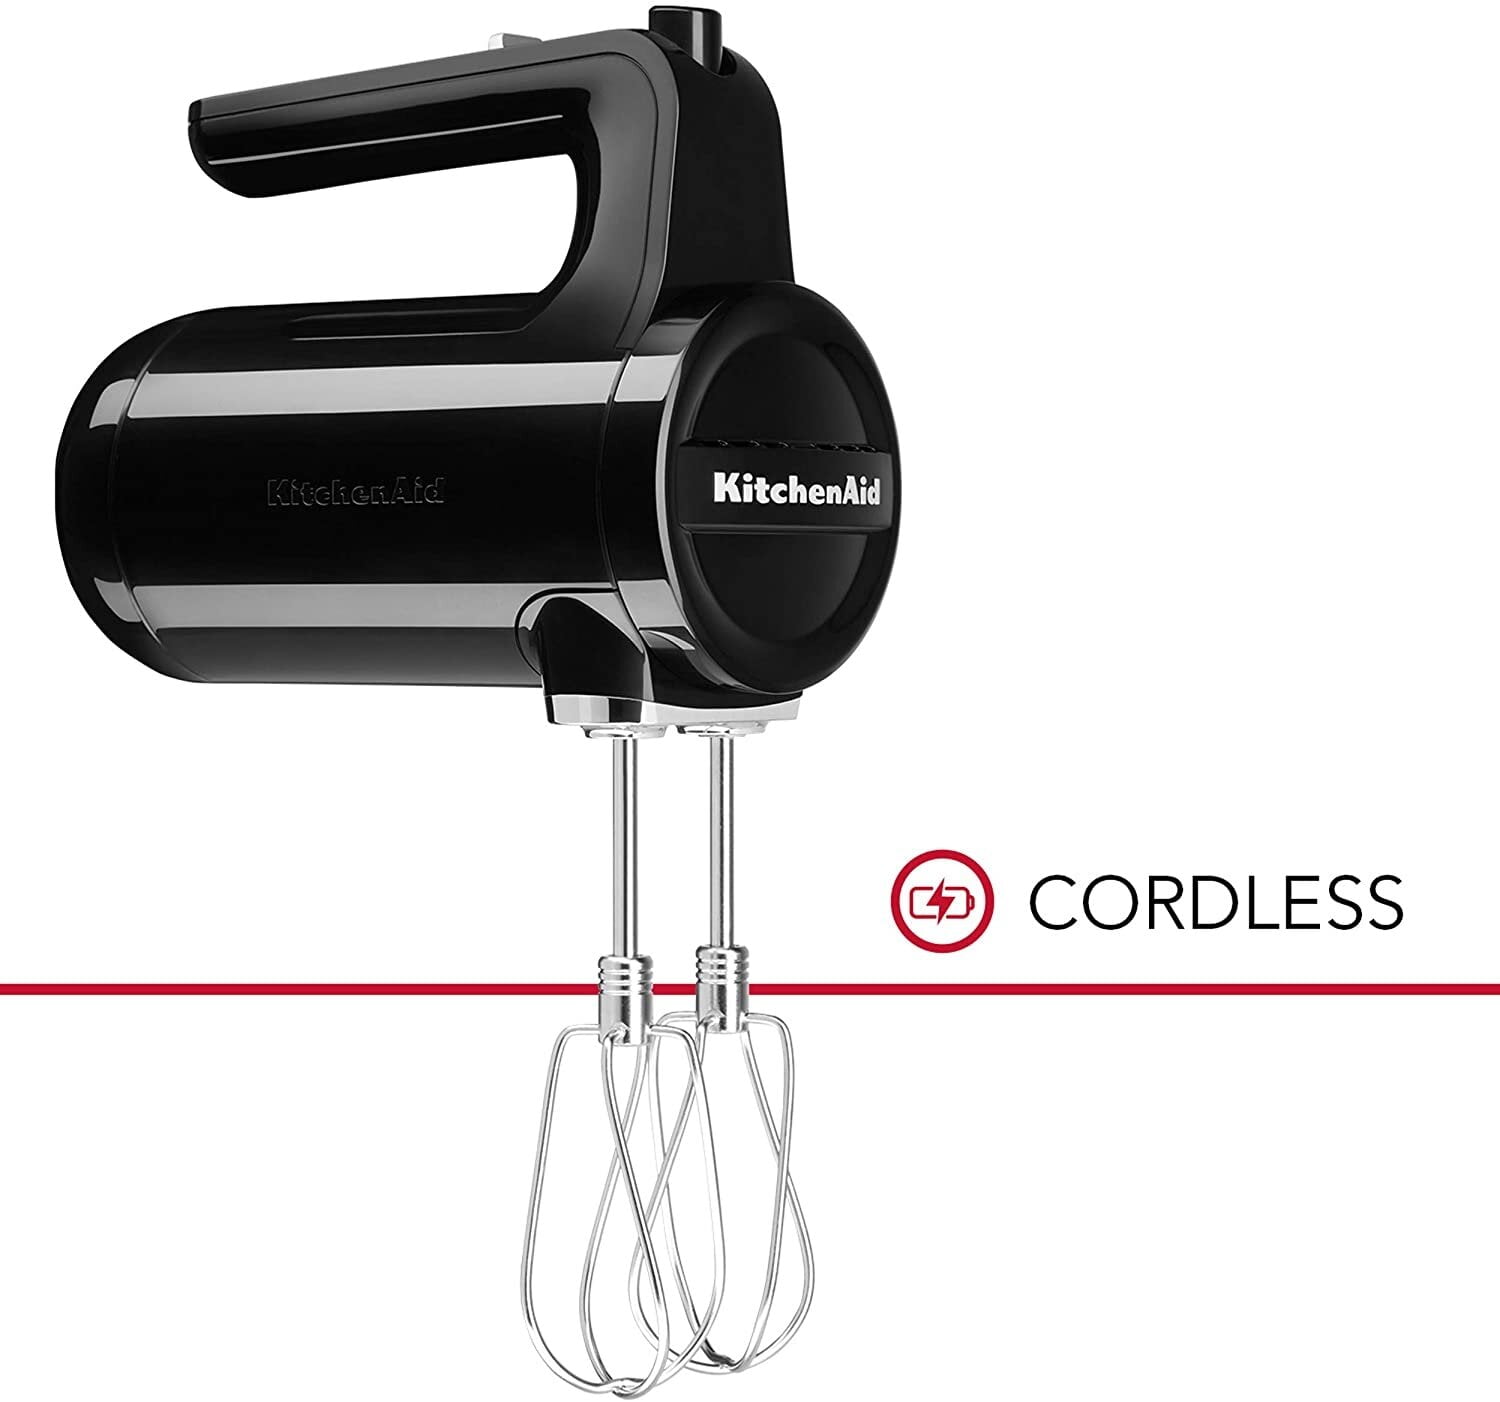 KitchenAid Cordless 7-Speed Hand Mixer: Taking the Traditional